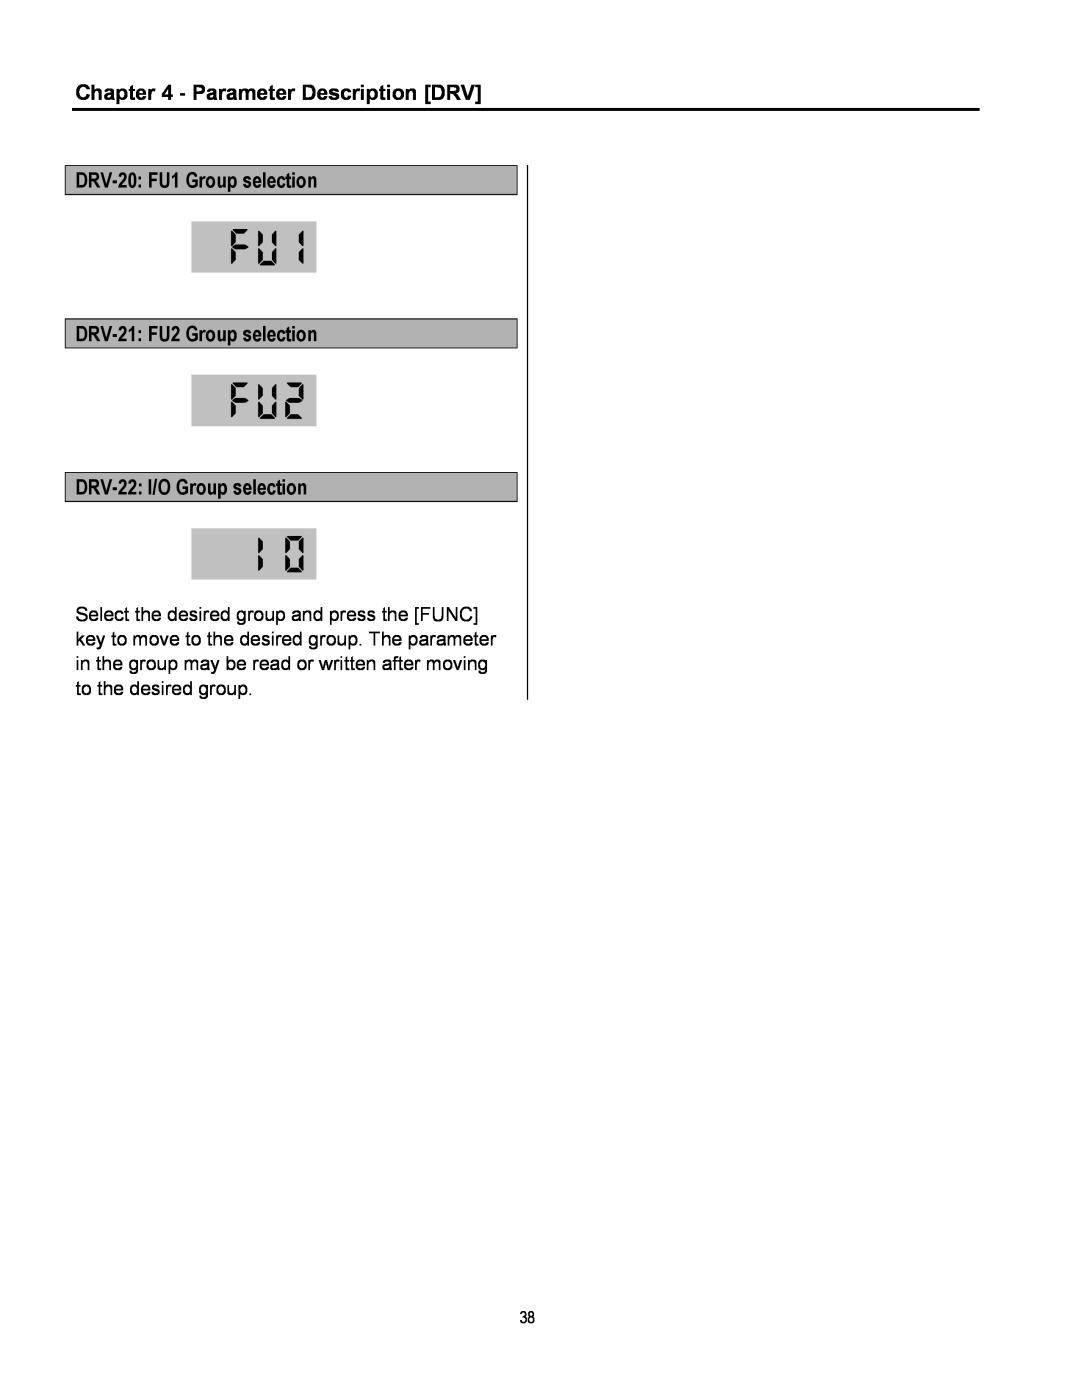 Cleveland Range inverter manual Parameter Description DRV, DRV-20 FU1 Group selection, DRV-21:FU2 Group selection 